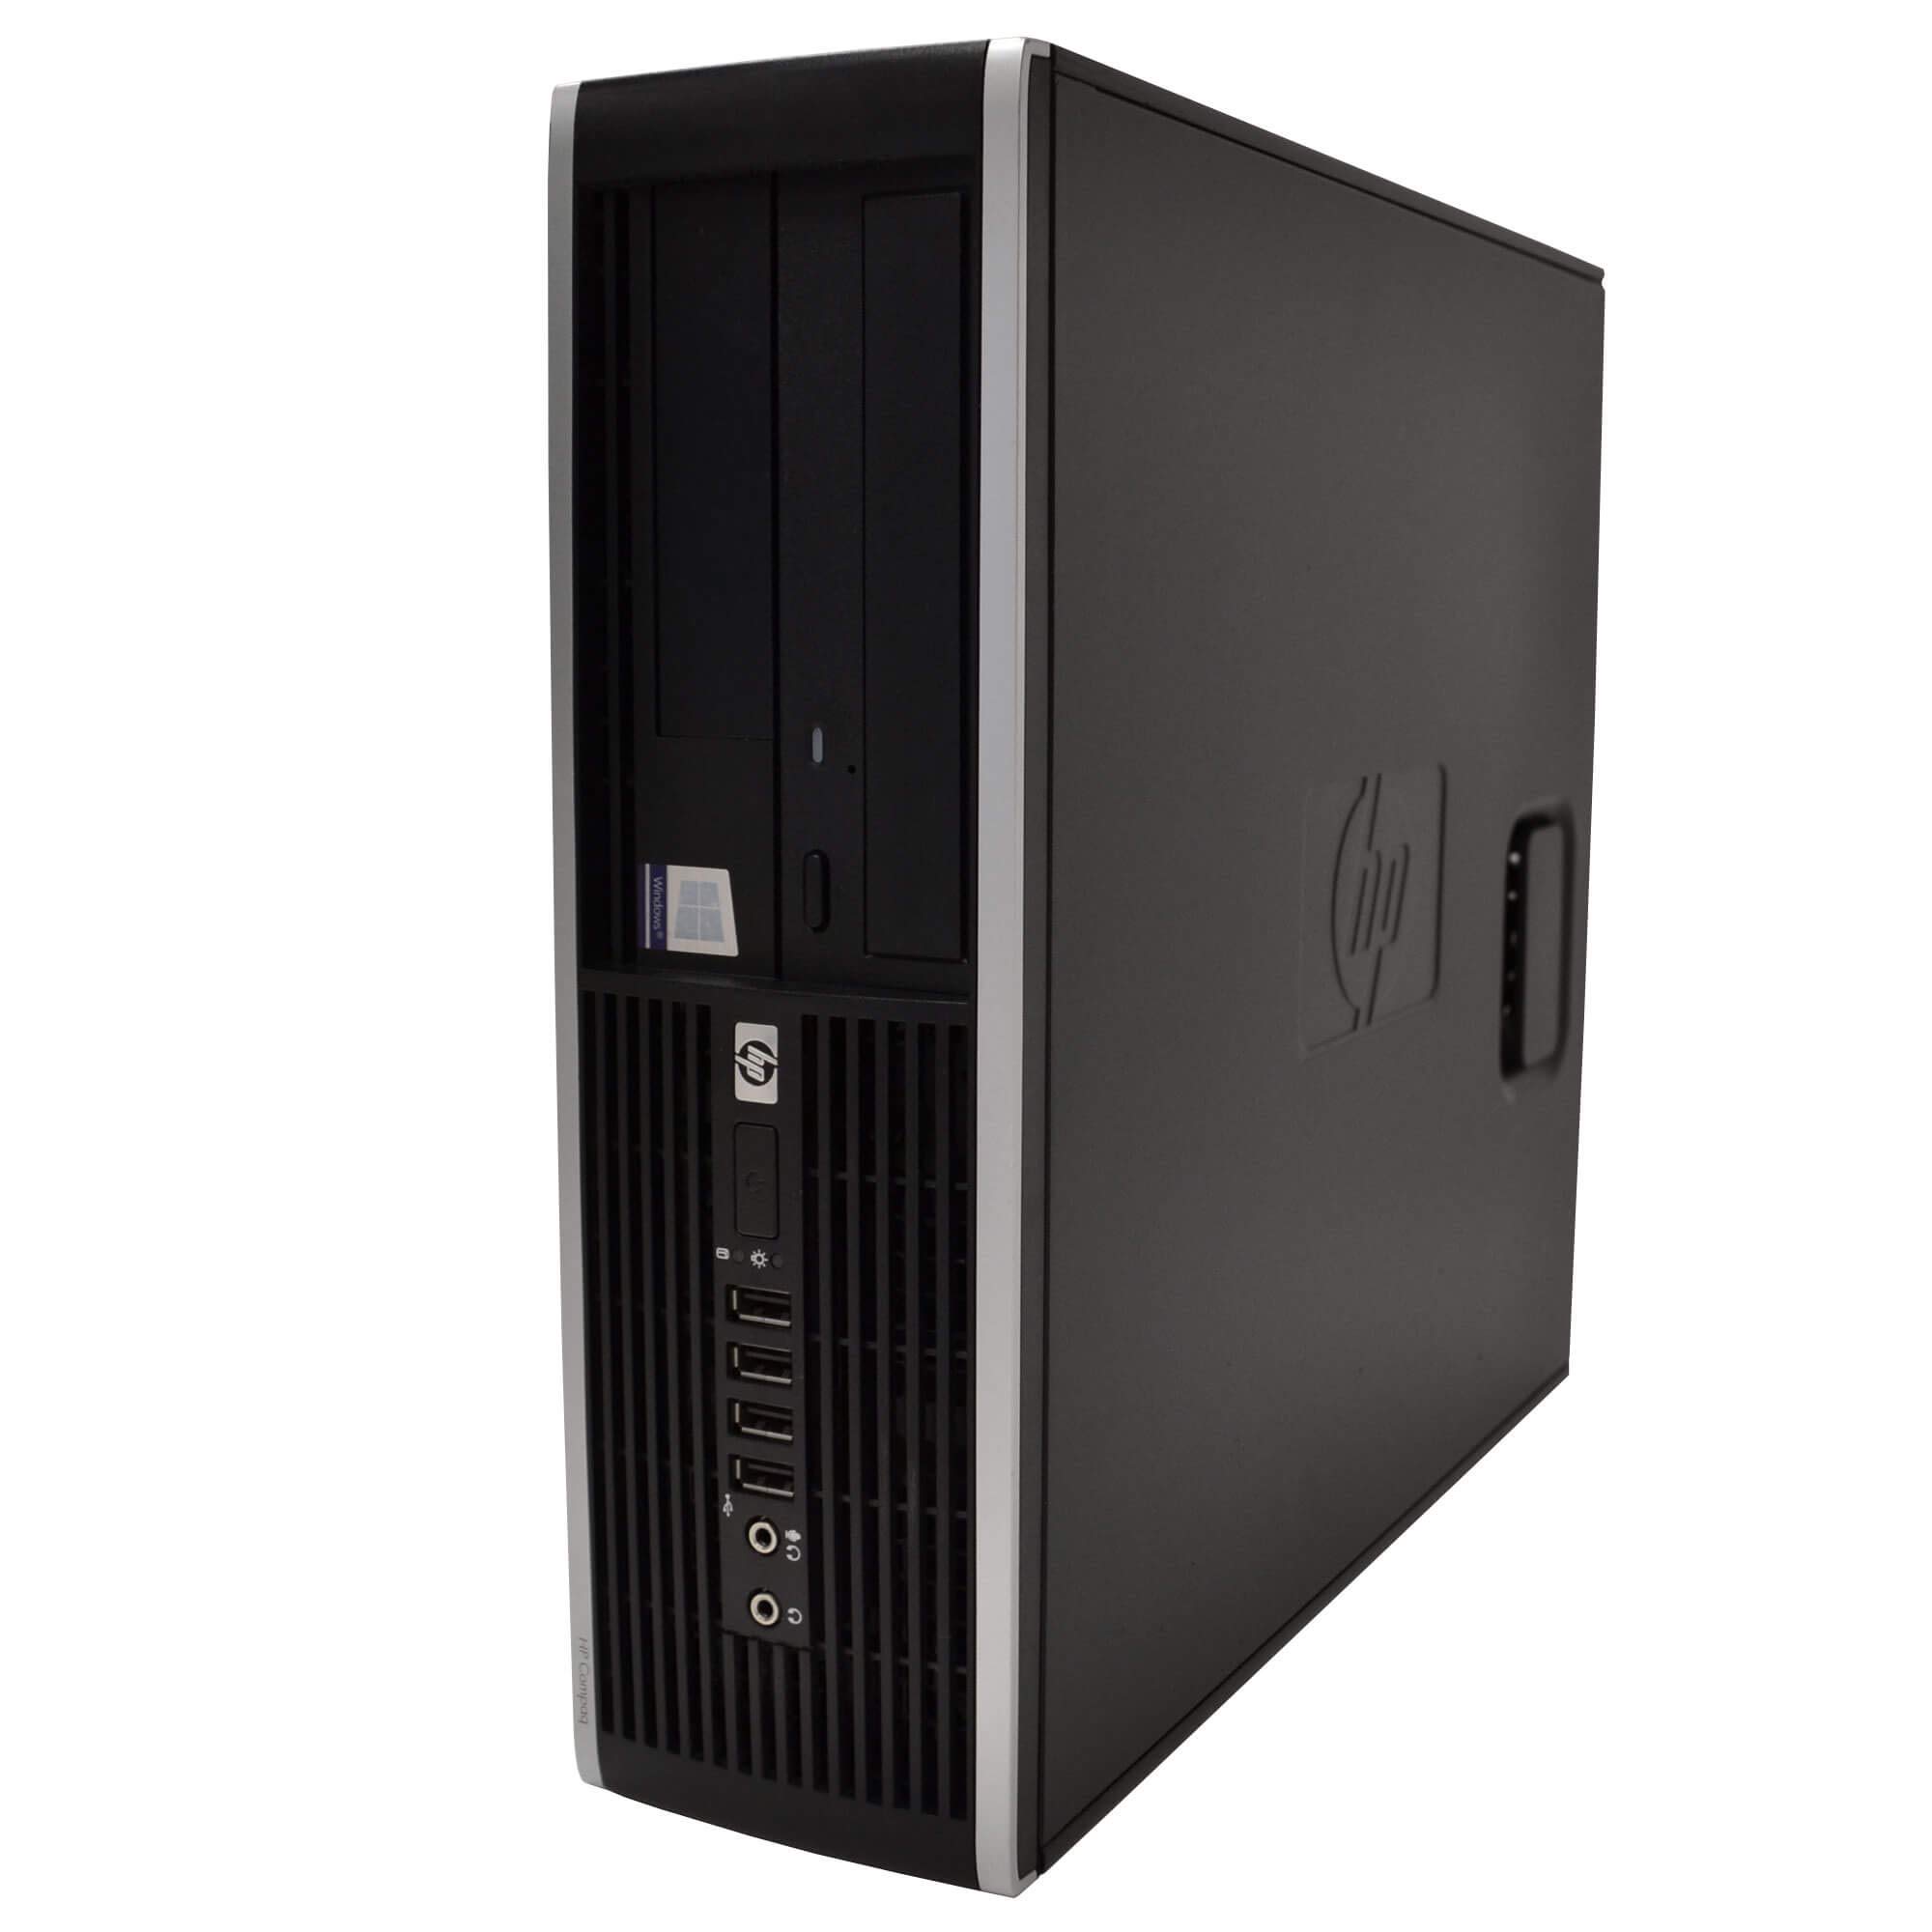 HP Elite 8100 Desktop Computer Package - Intel Core i5 3.2-GHz, 8GB RAM, 2 TB Hard Drive, 22 Inch LCD, DVD, Keyboard, Mouse, WiFi, Windows 10 (Renewed)